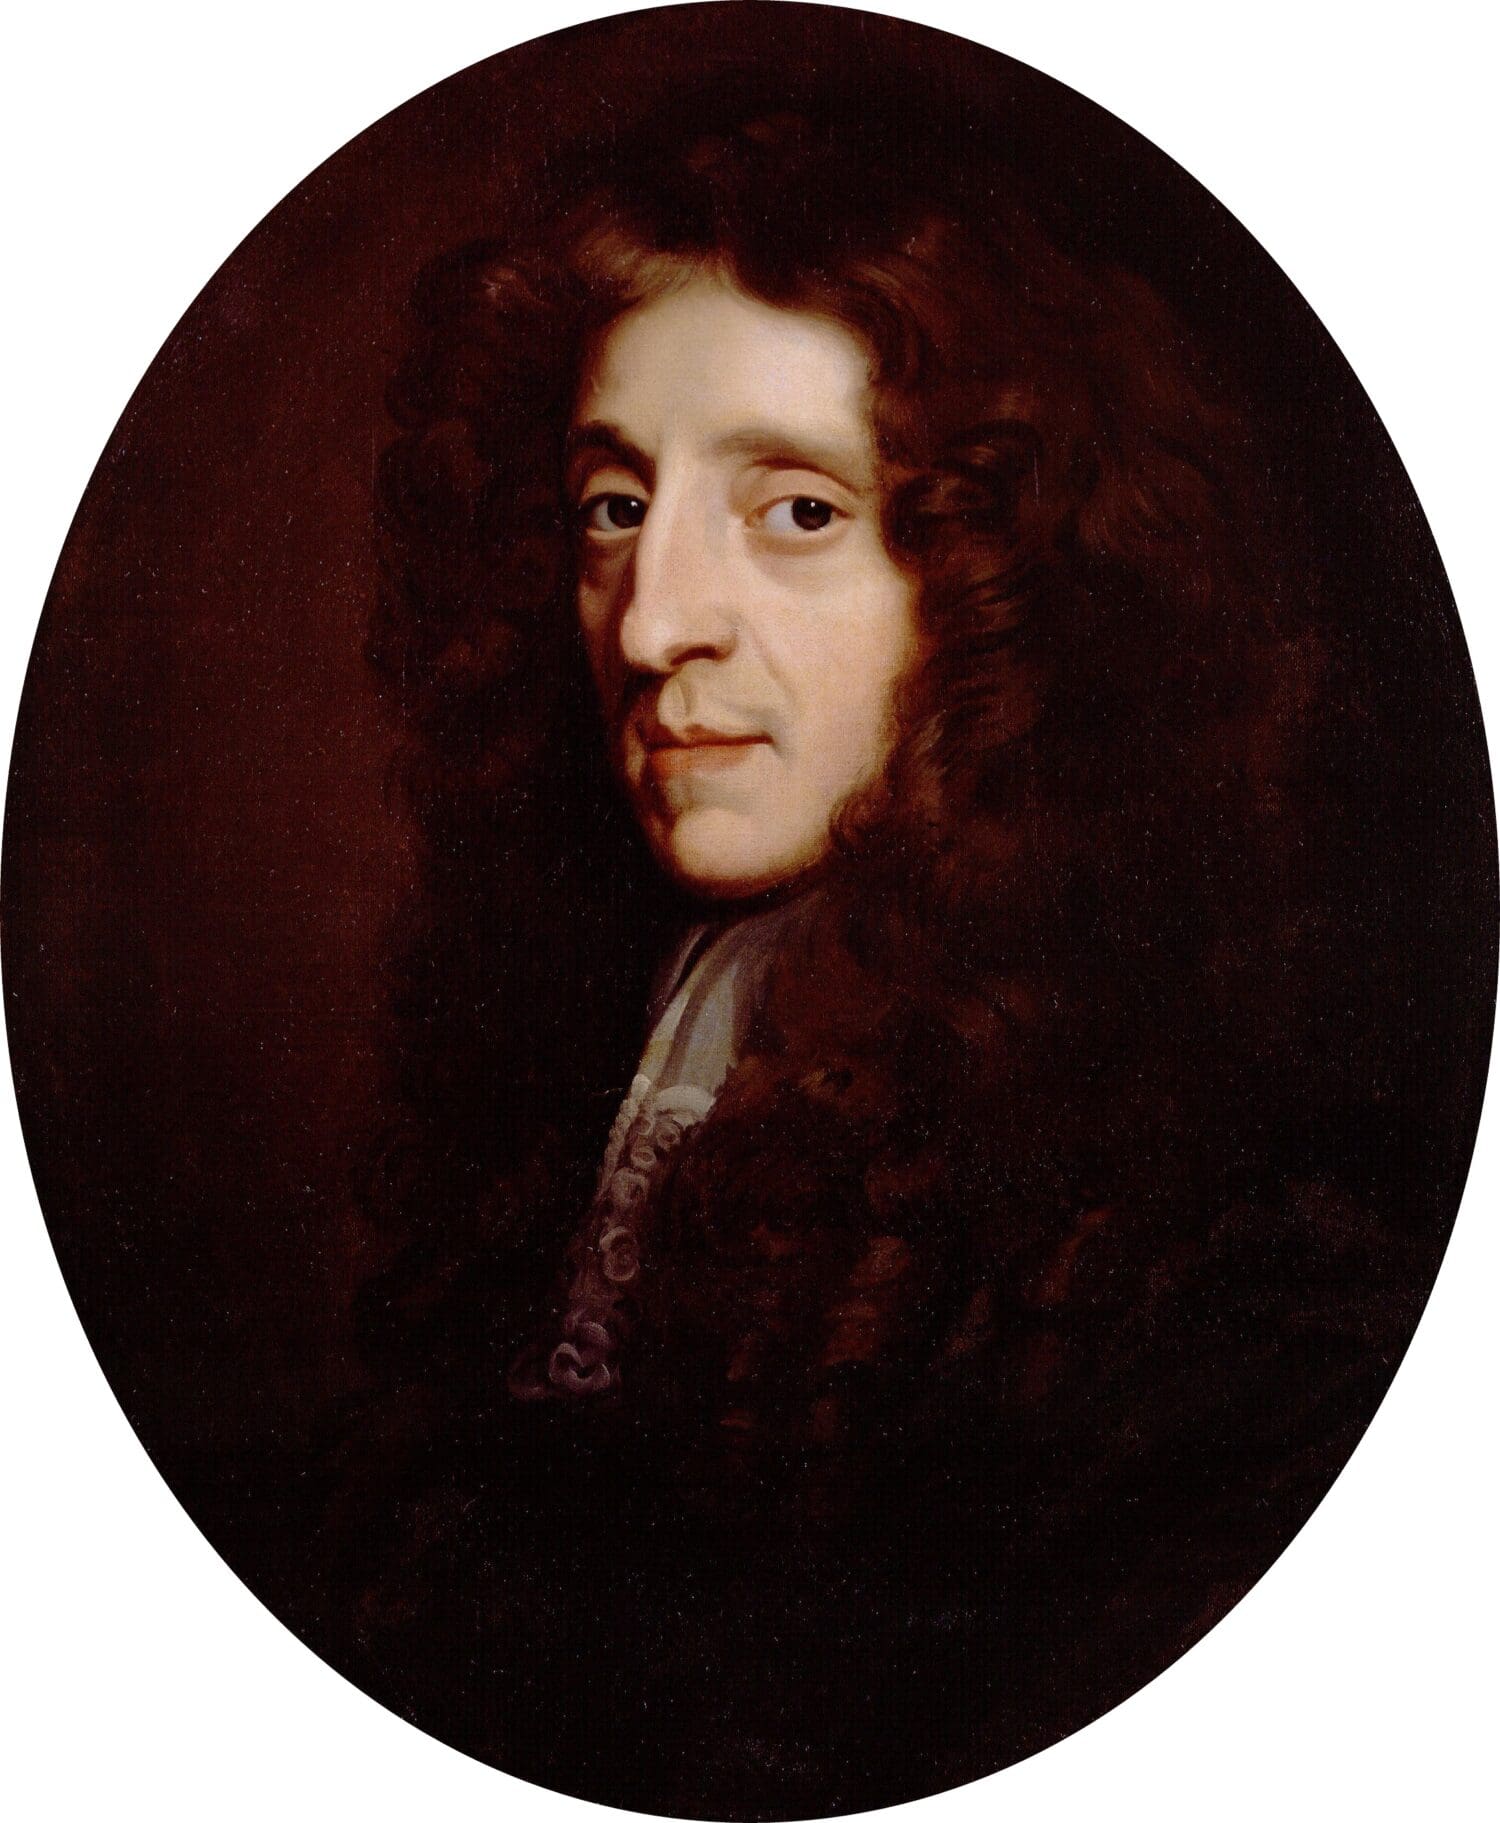 John Locke of England